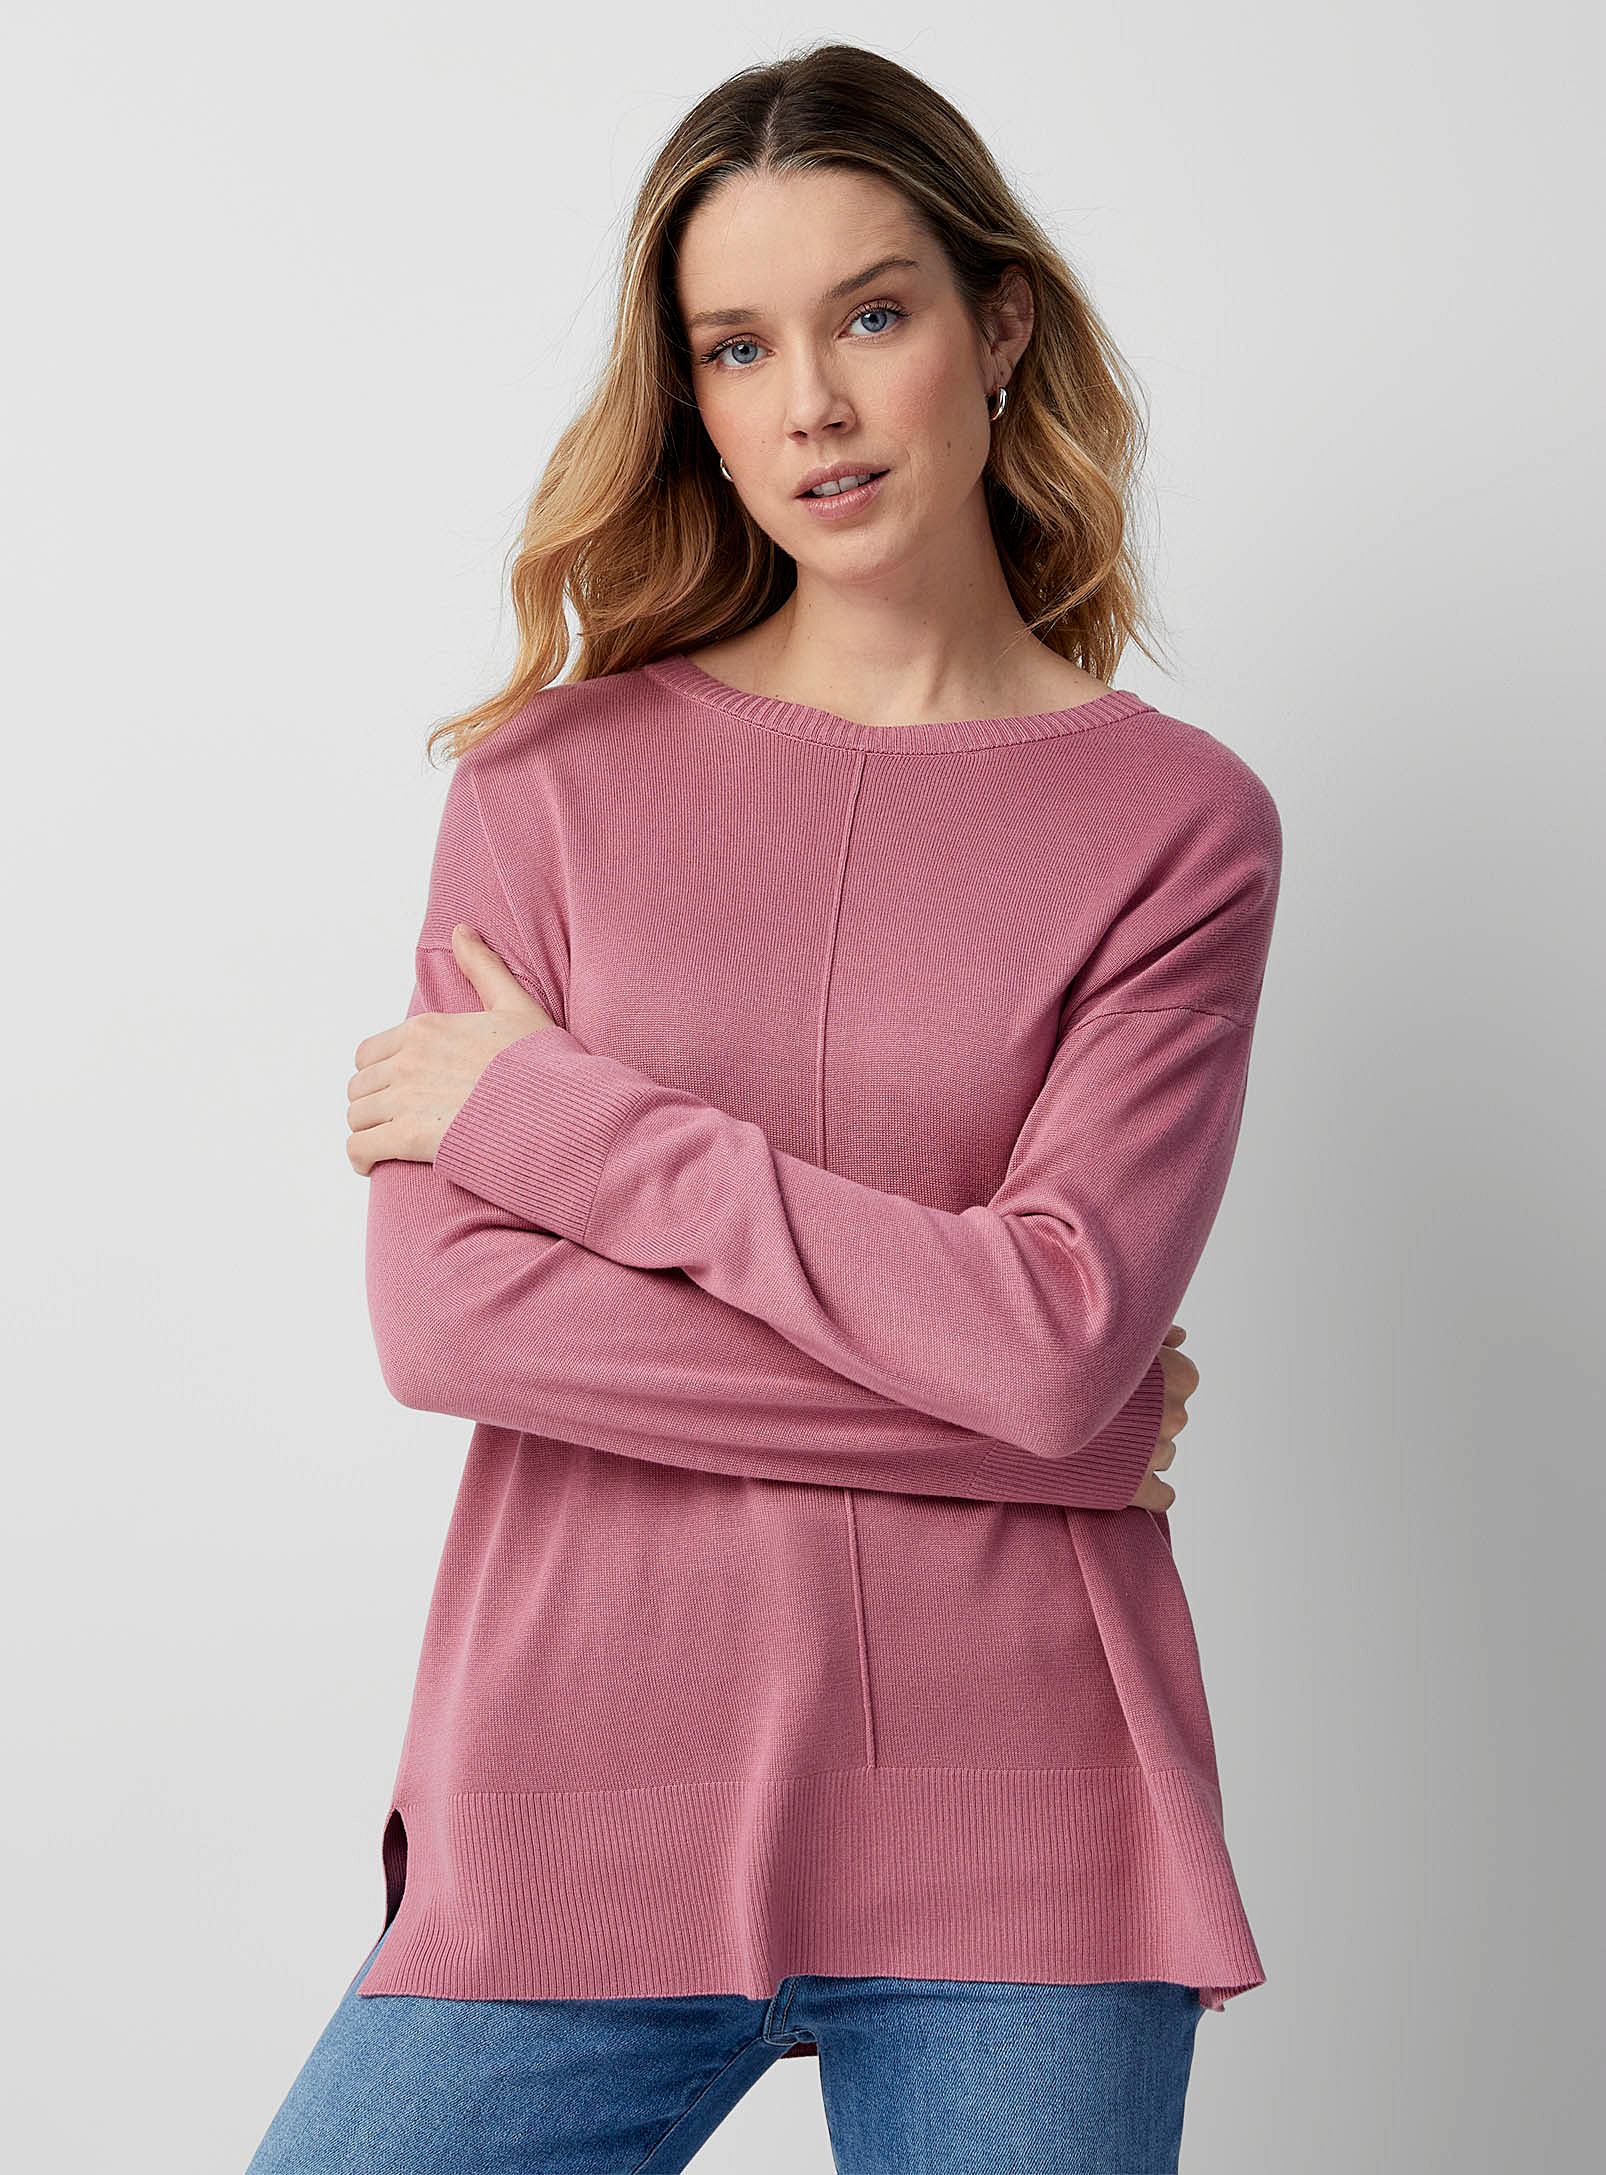 Contemporaine Embossed Seam Flowy Sweater In Pink